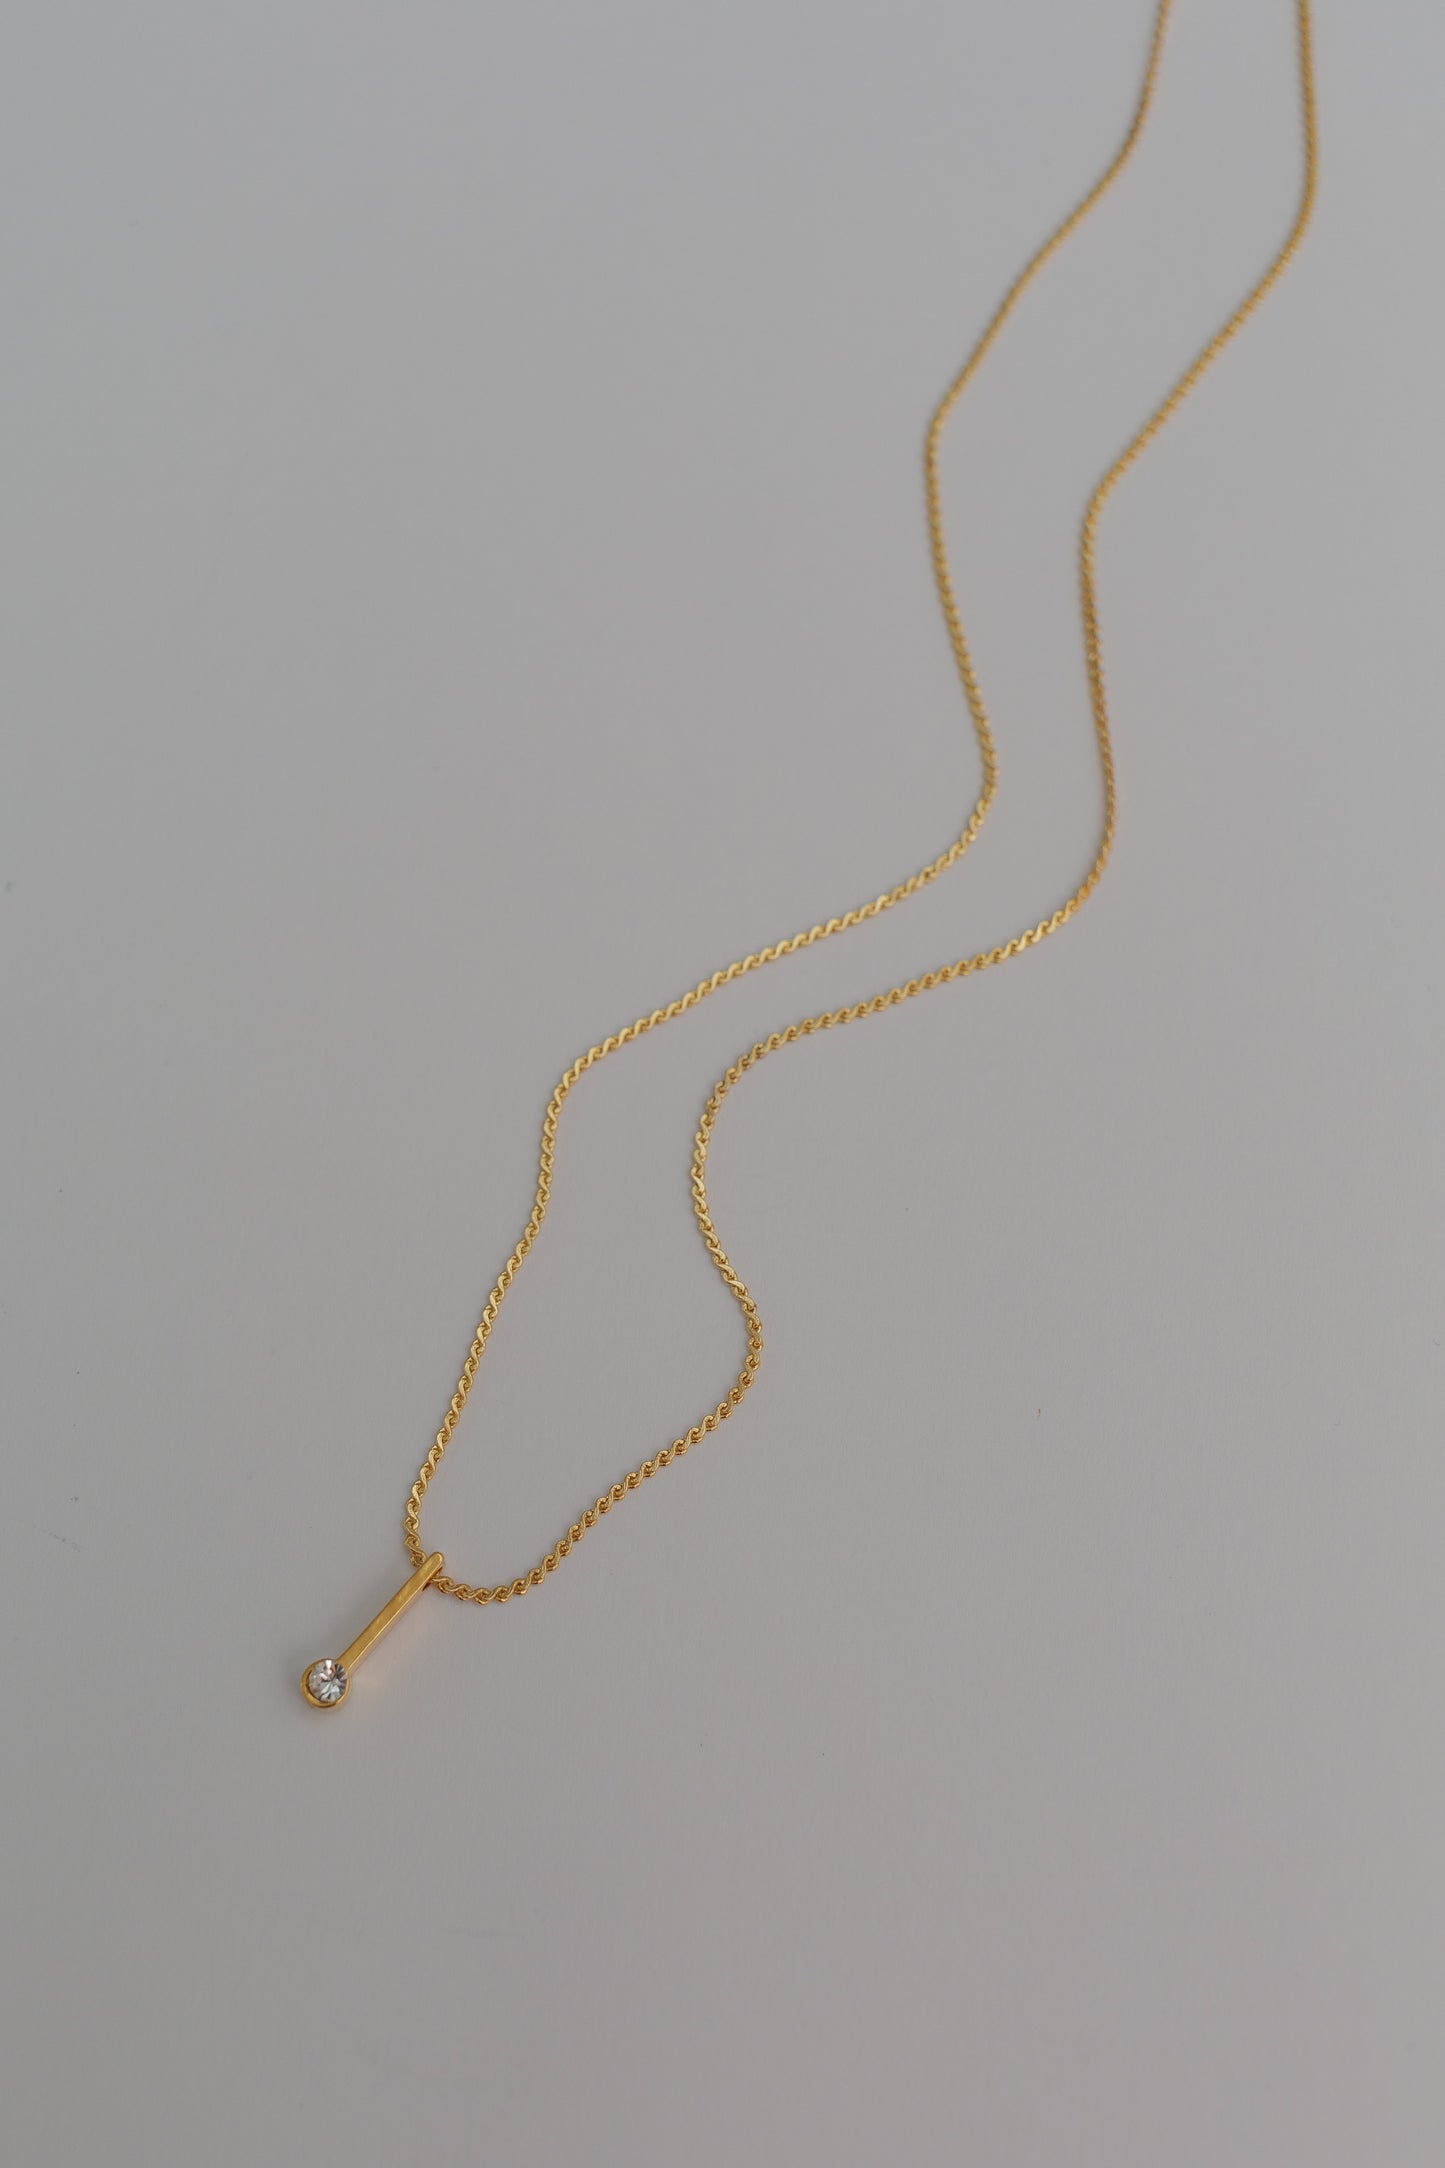 Minimalist chain with pendant